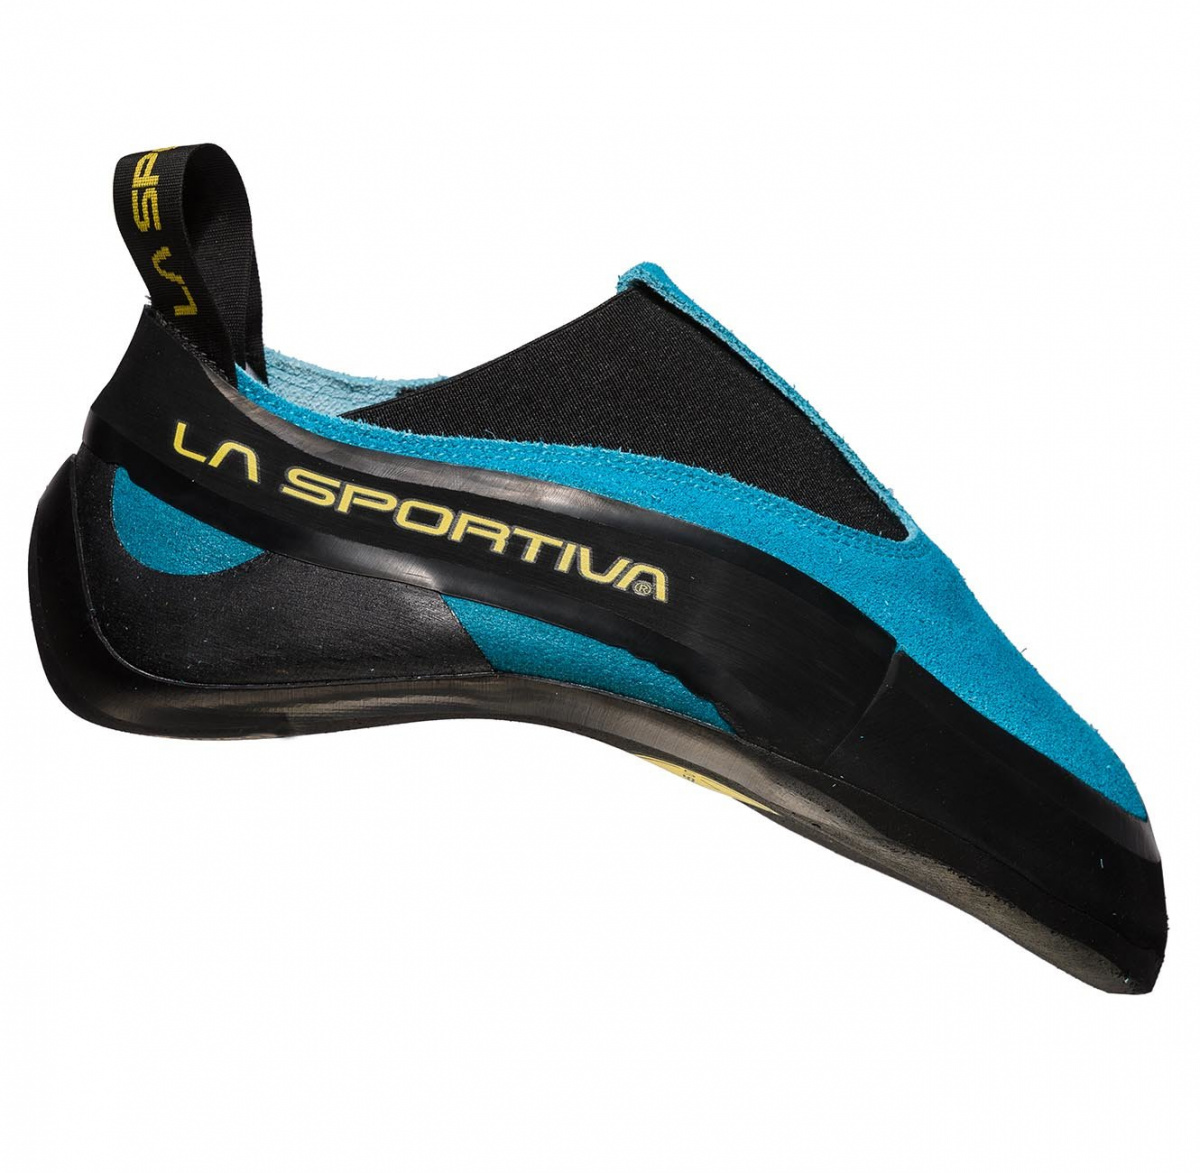 Lezečky La Sportiva Cobra blue 40,5 EU